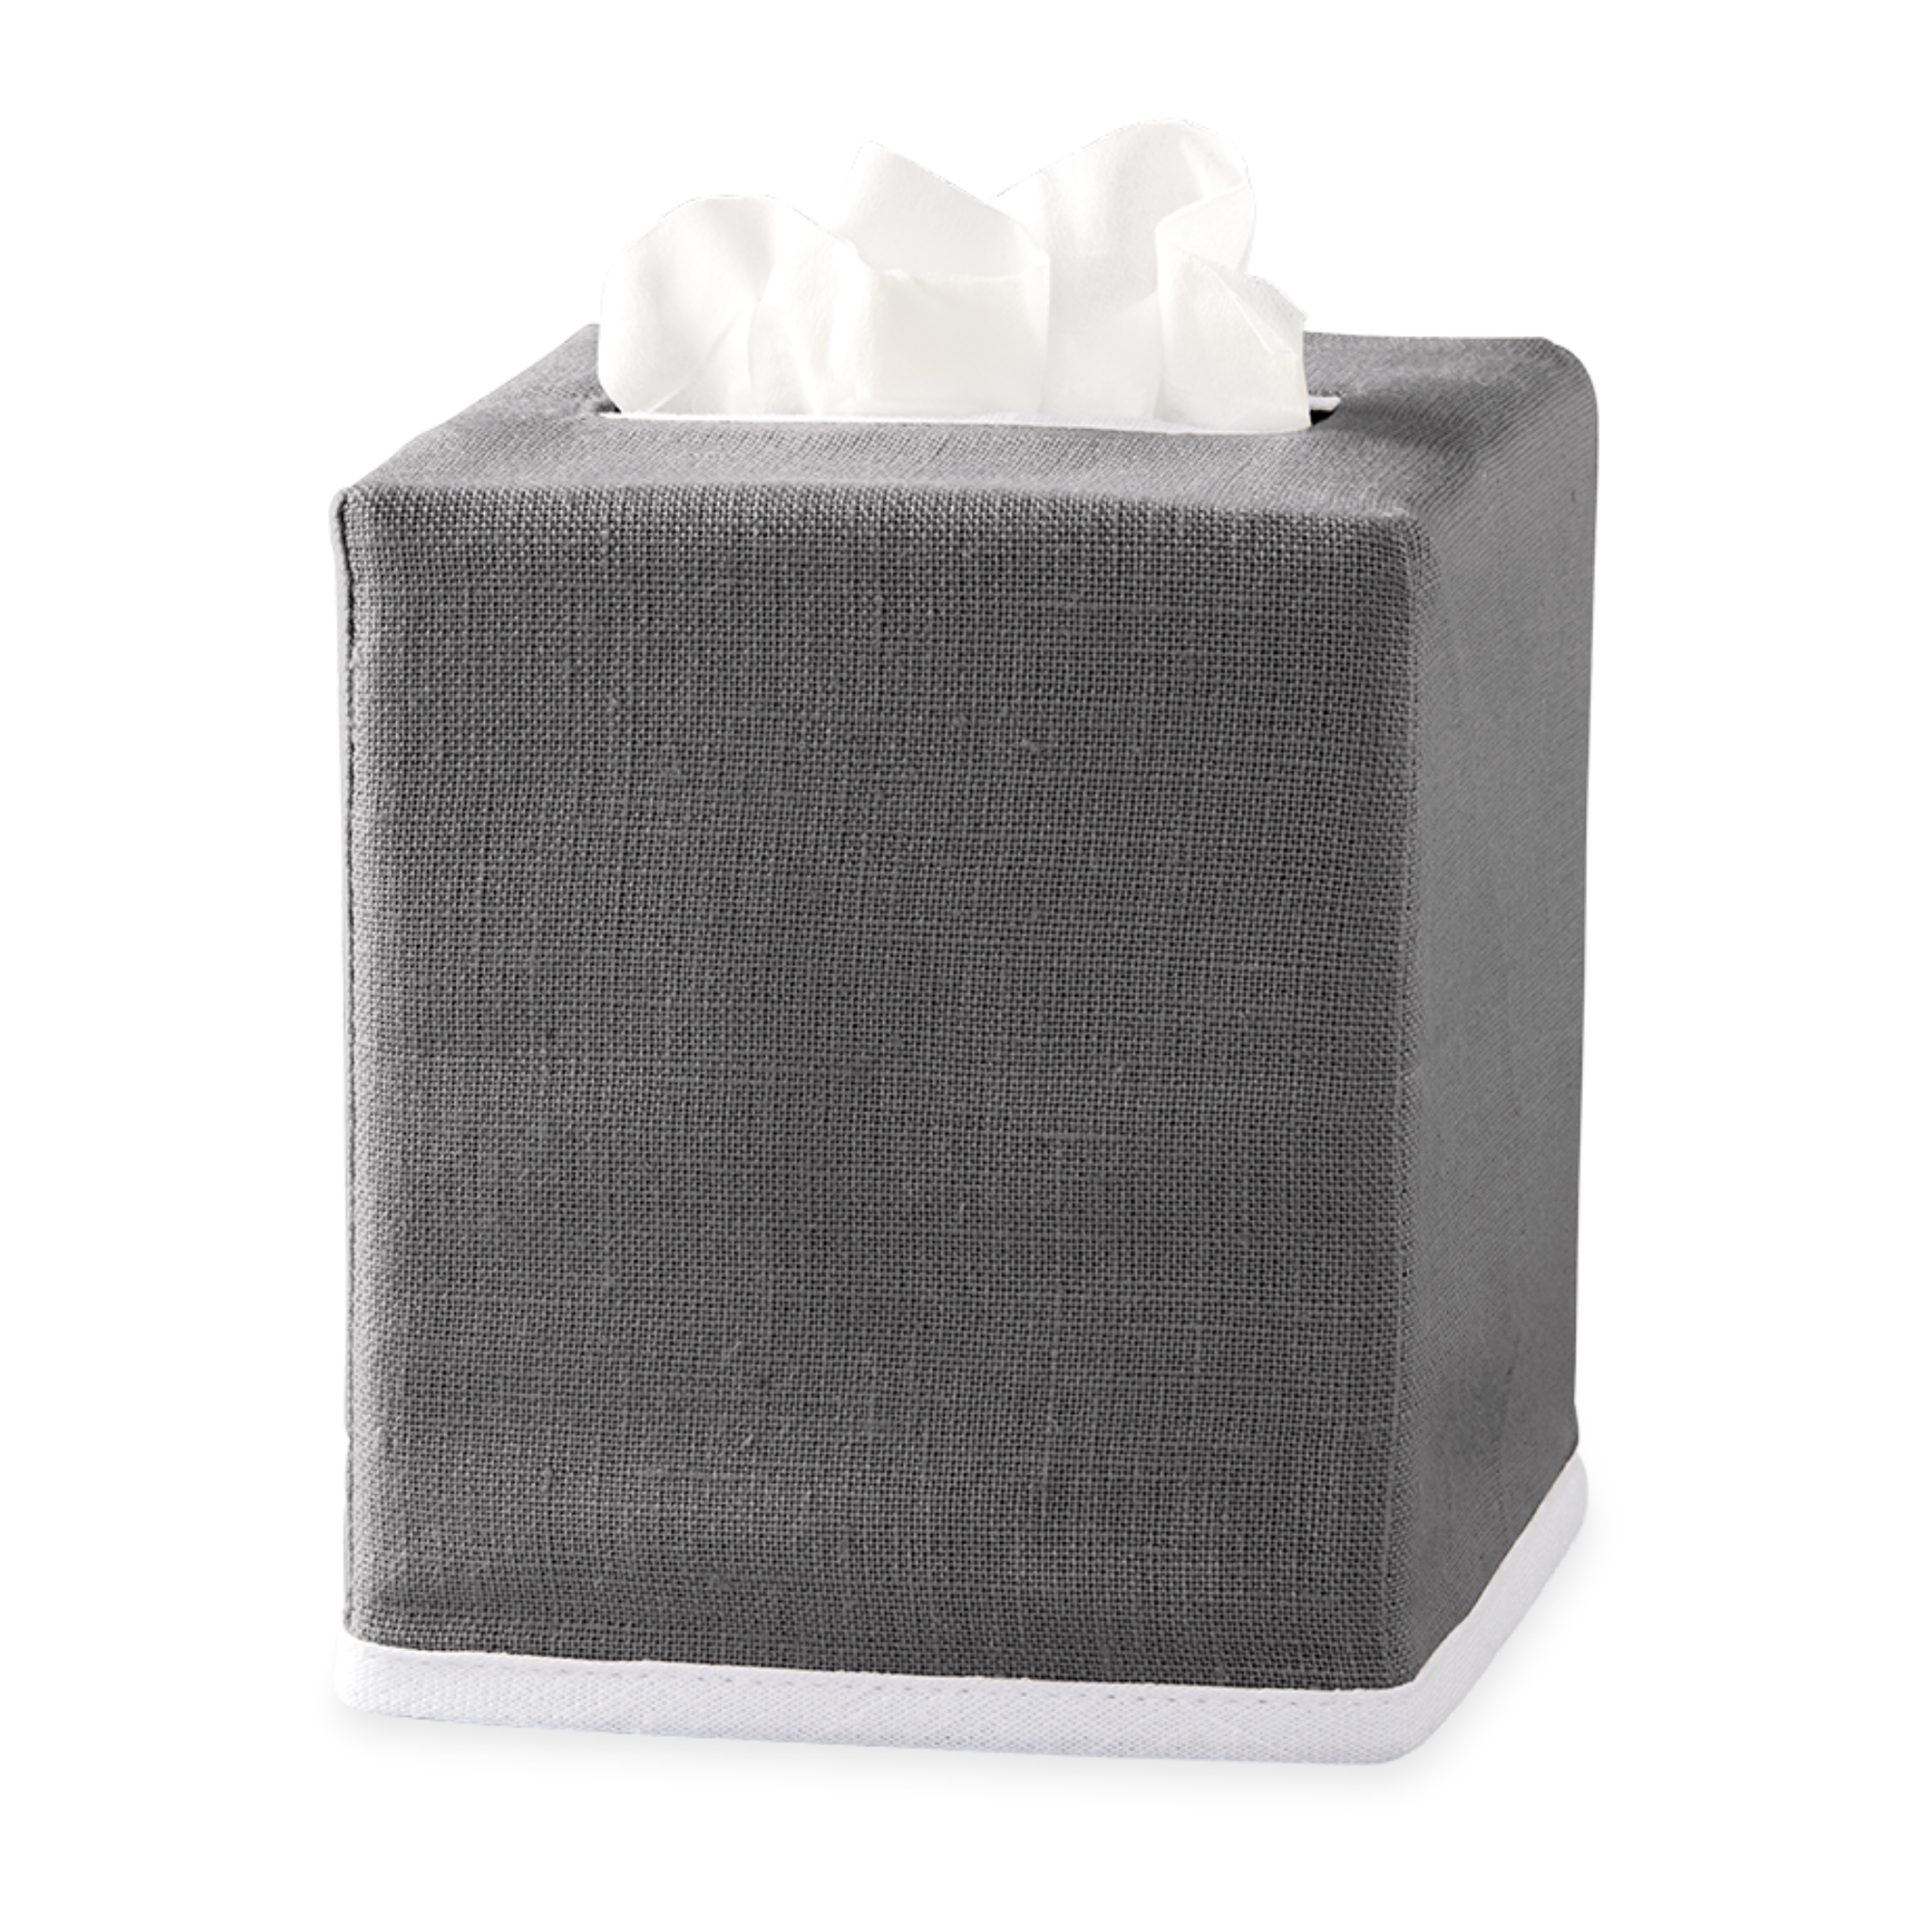 Smoke Grey Matouk Chelsea Linen Tissue Box Cover Against White Background